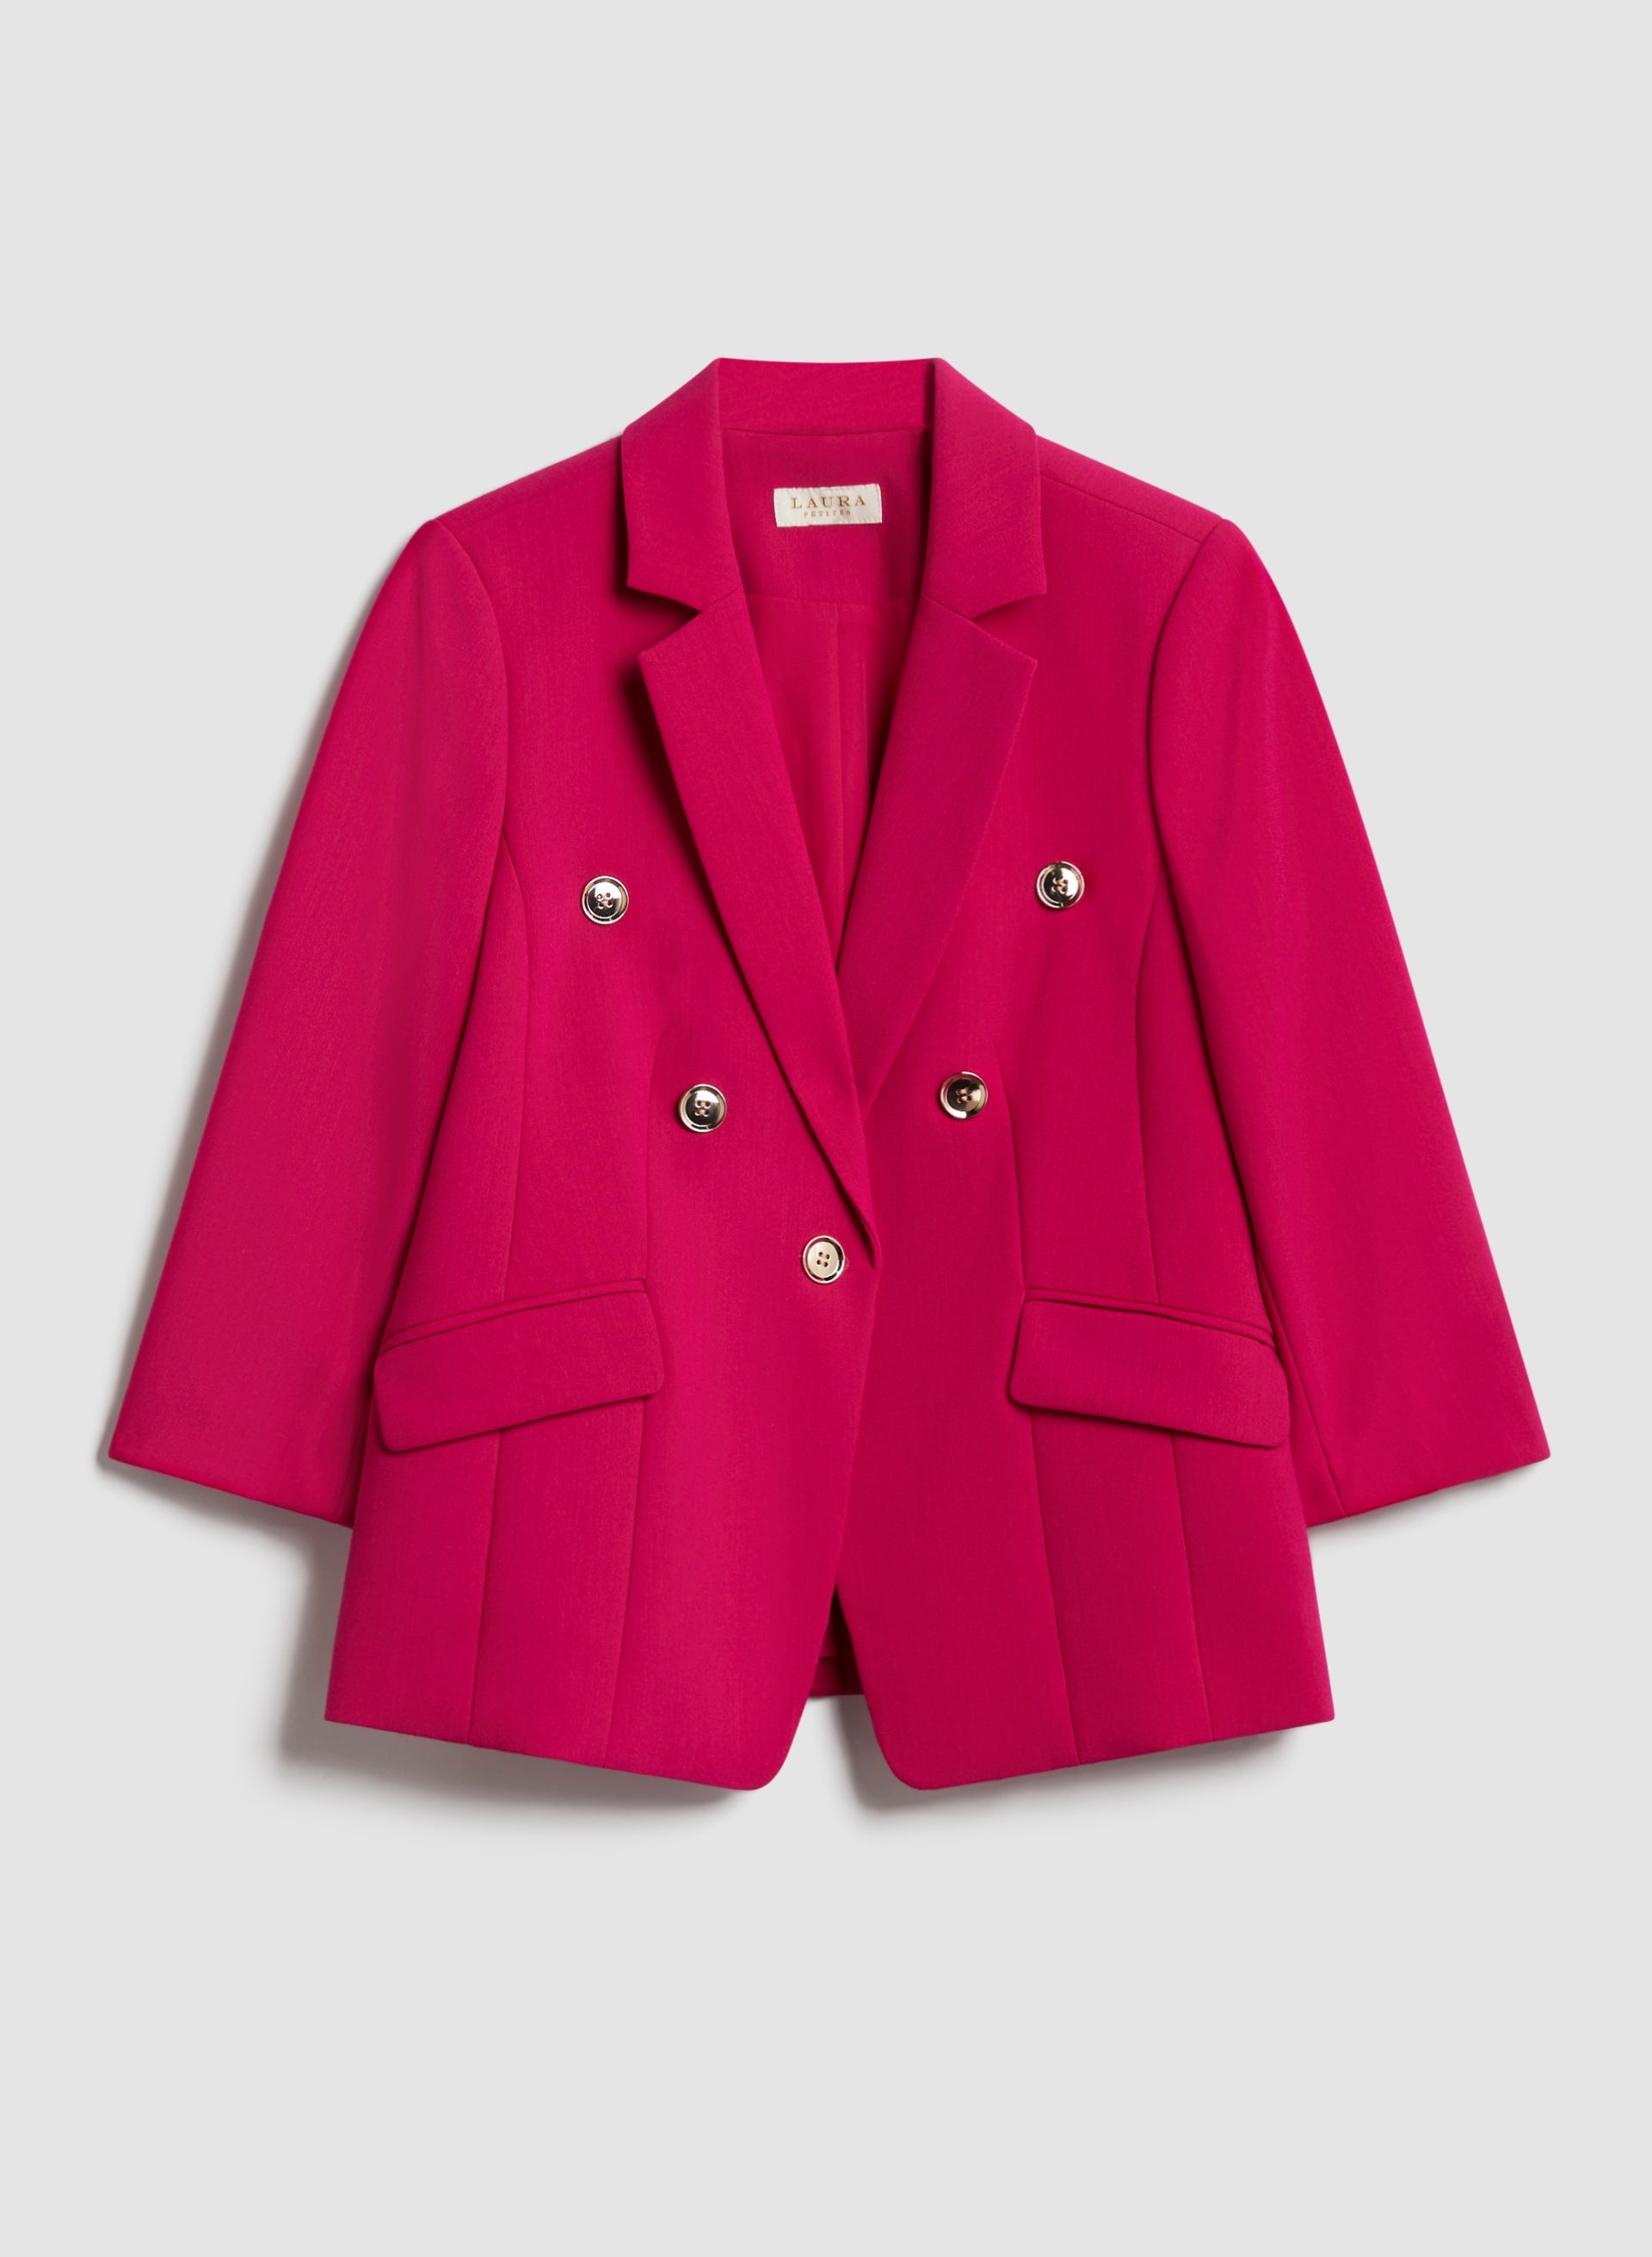 CenturyX Women's Blazer Suit 3/4 Sleeve Cardigan Jacket Suit